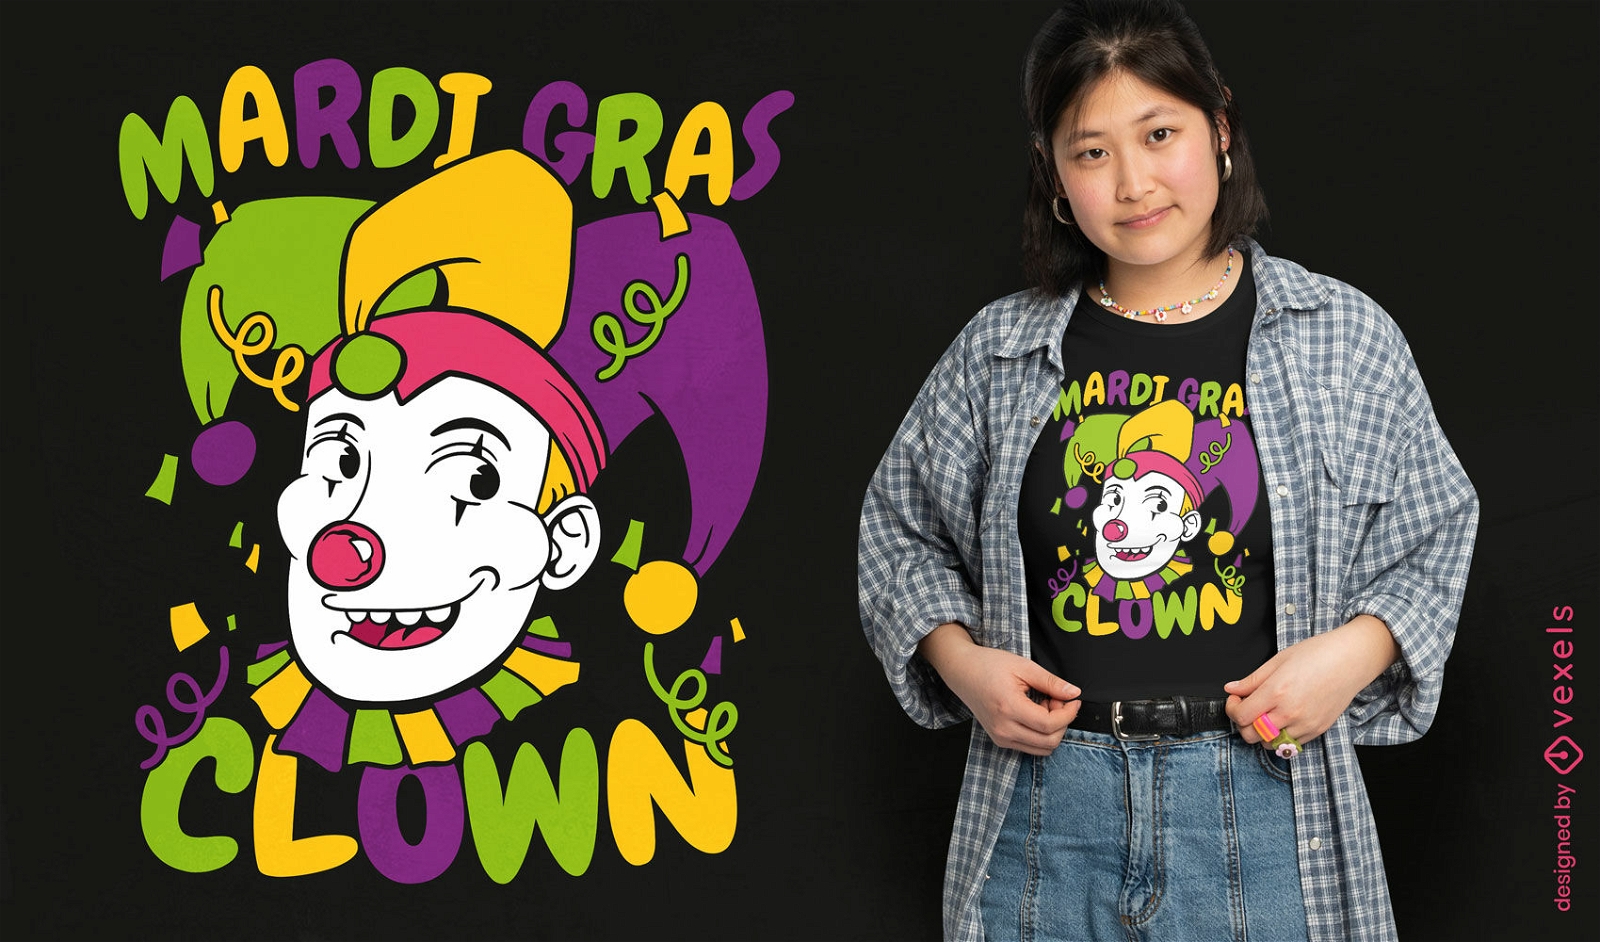 Mardi gras clown t-shirt design